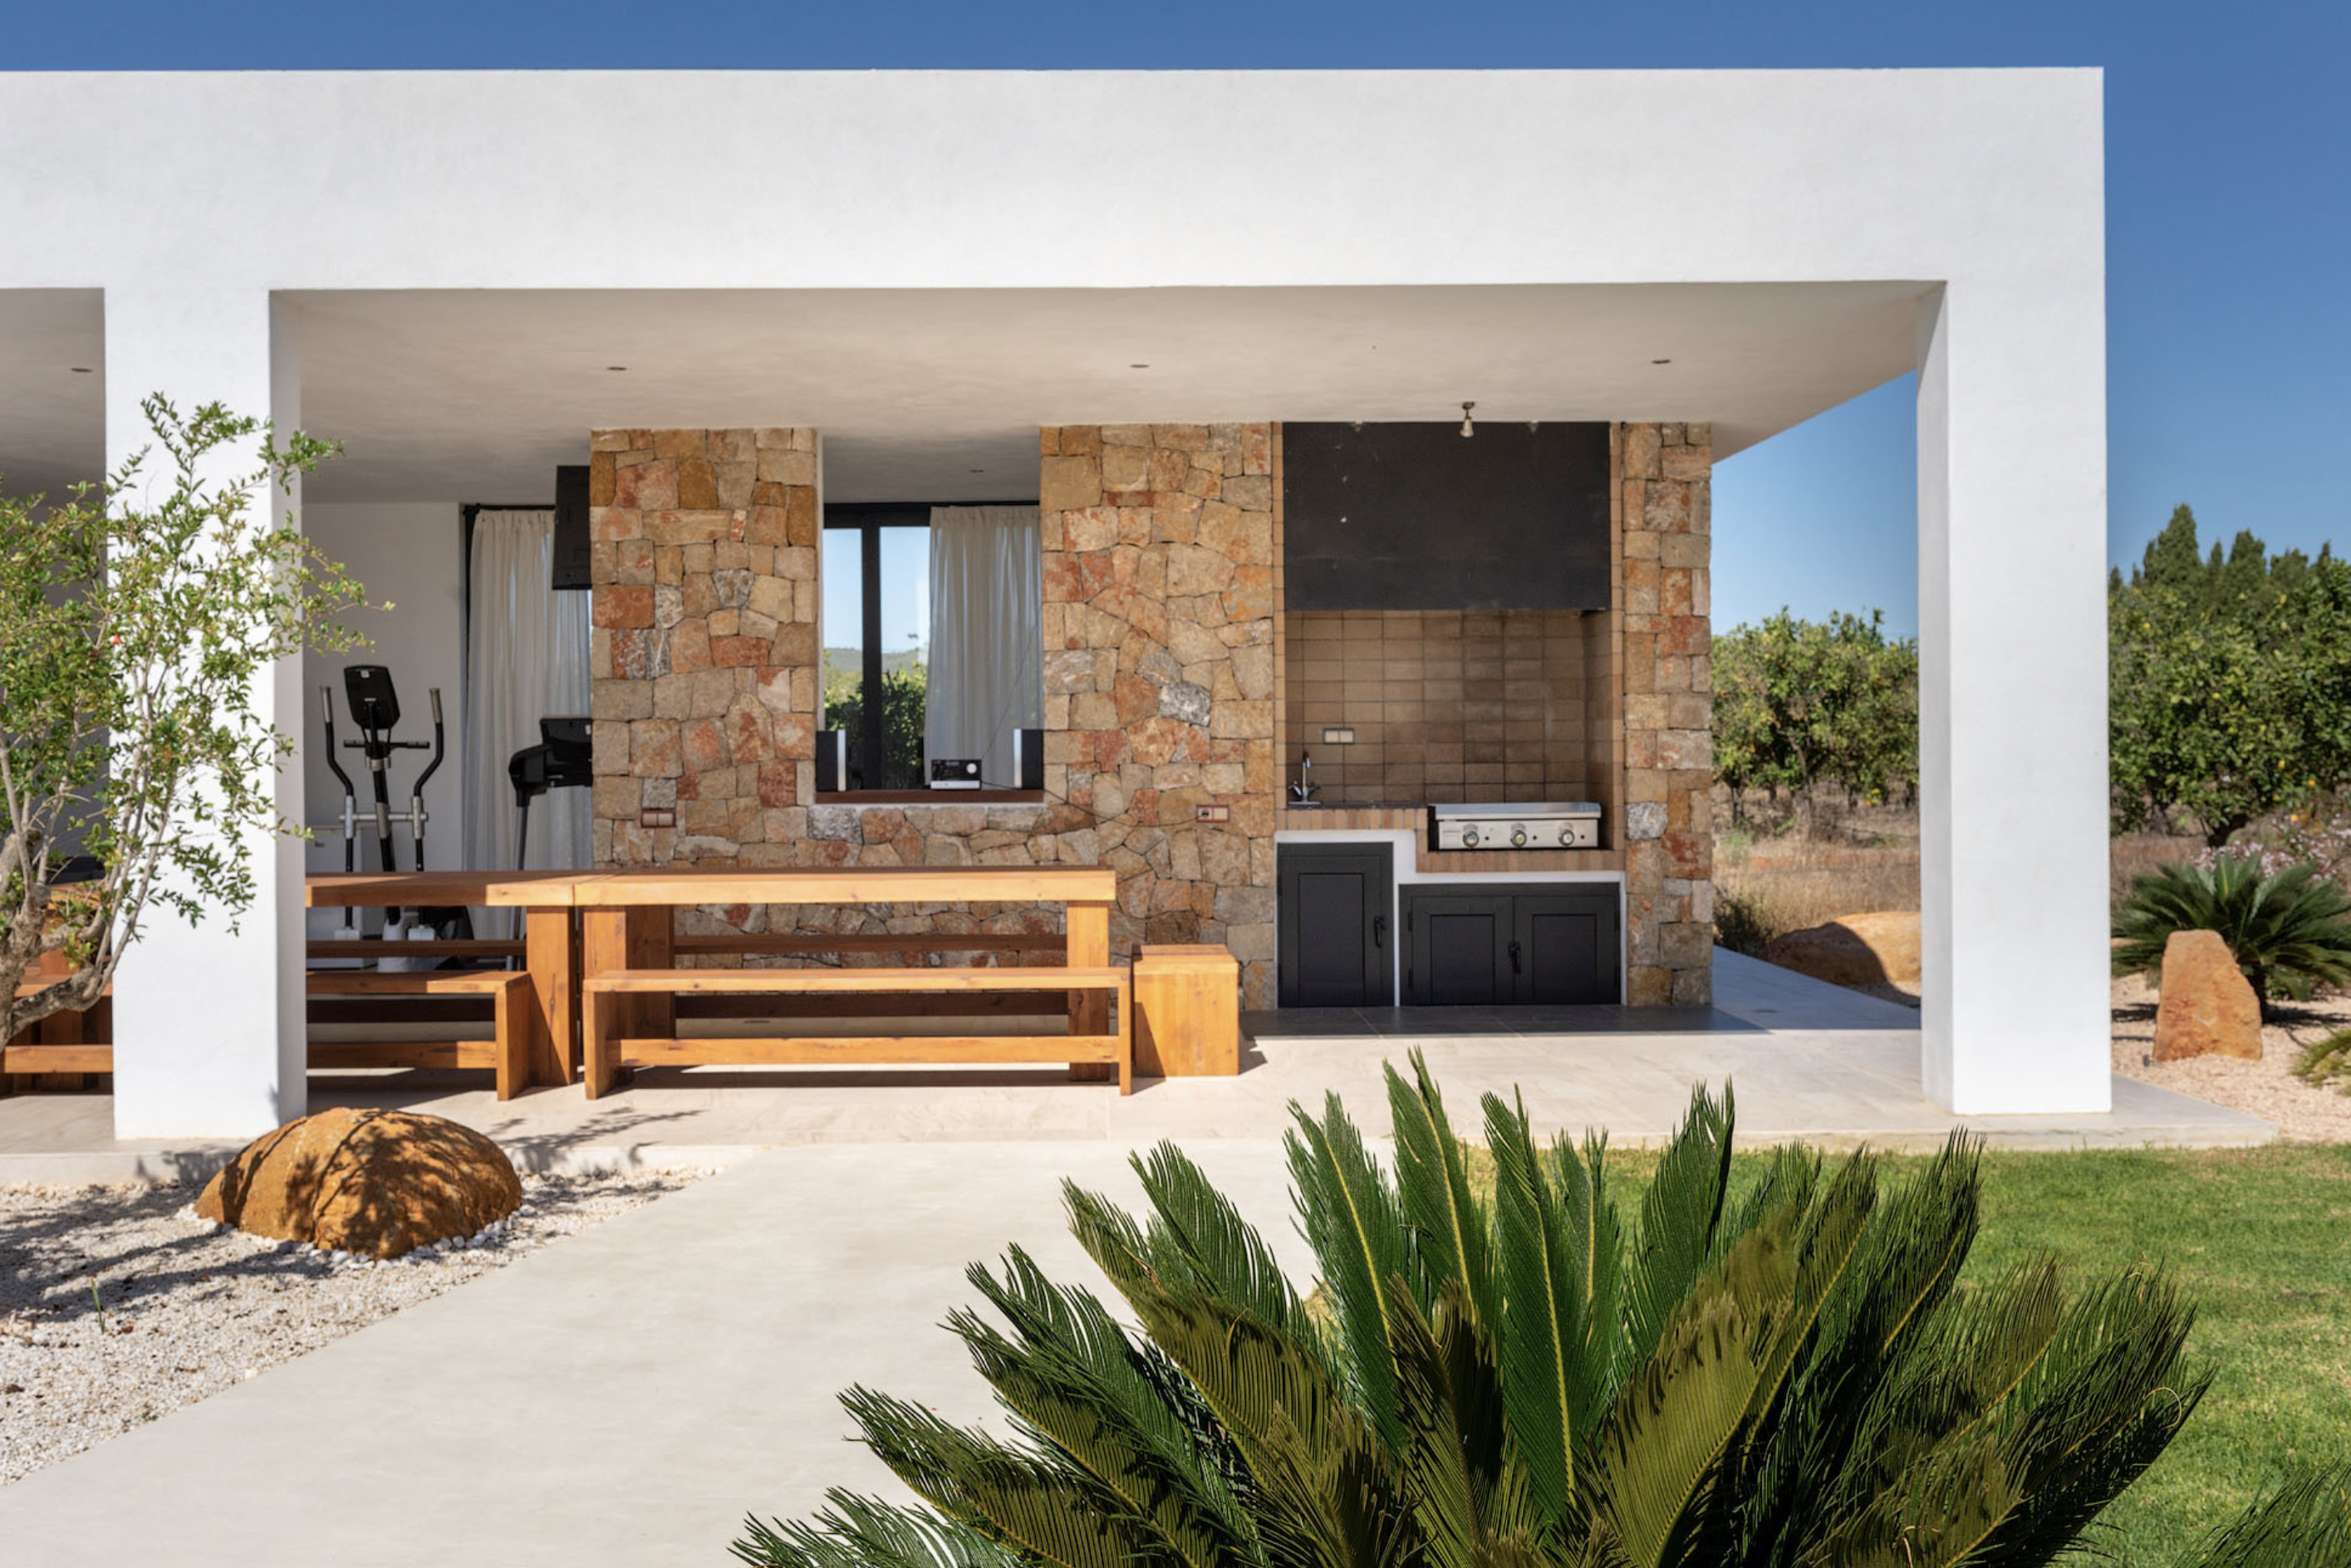 resa estates ibiza for rent villa santa eulalia 2021 can cosmi family house private pool barbecue.jpg